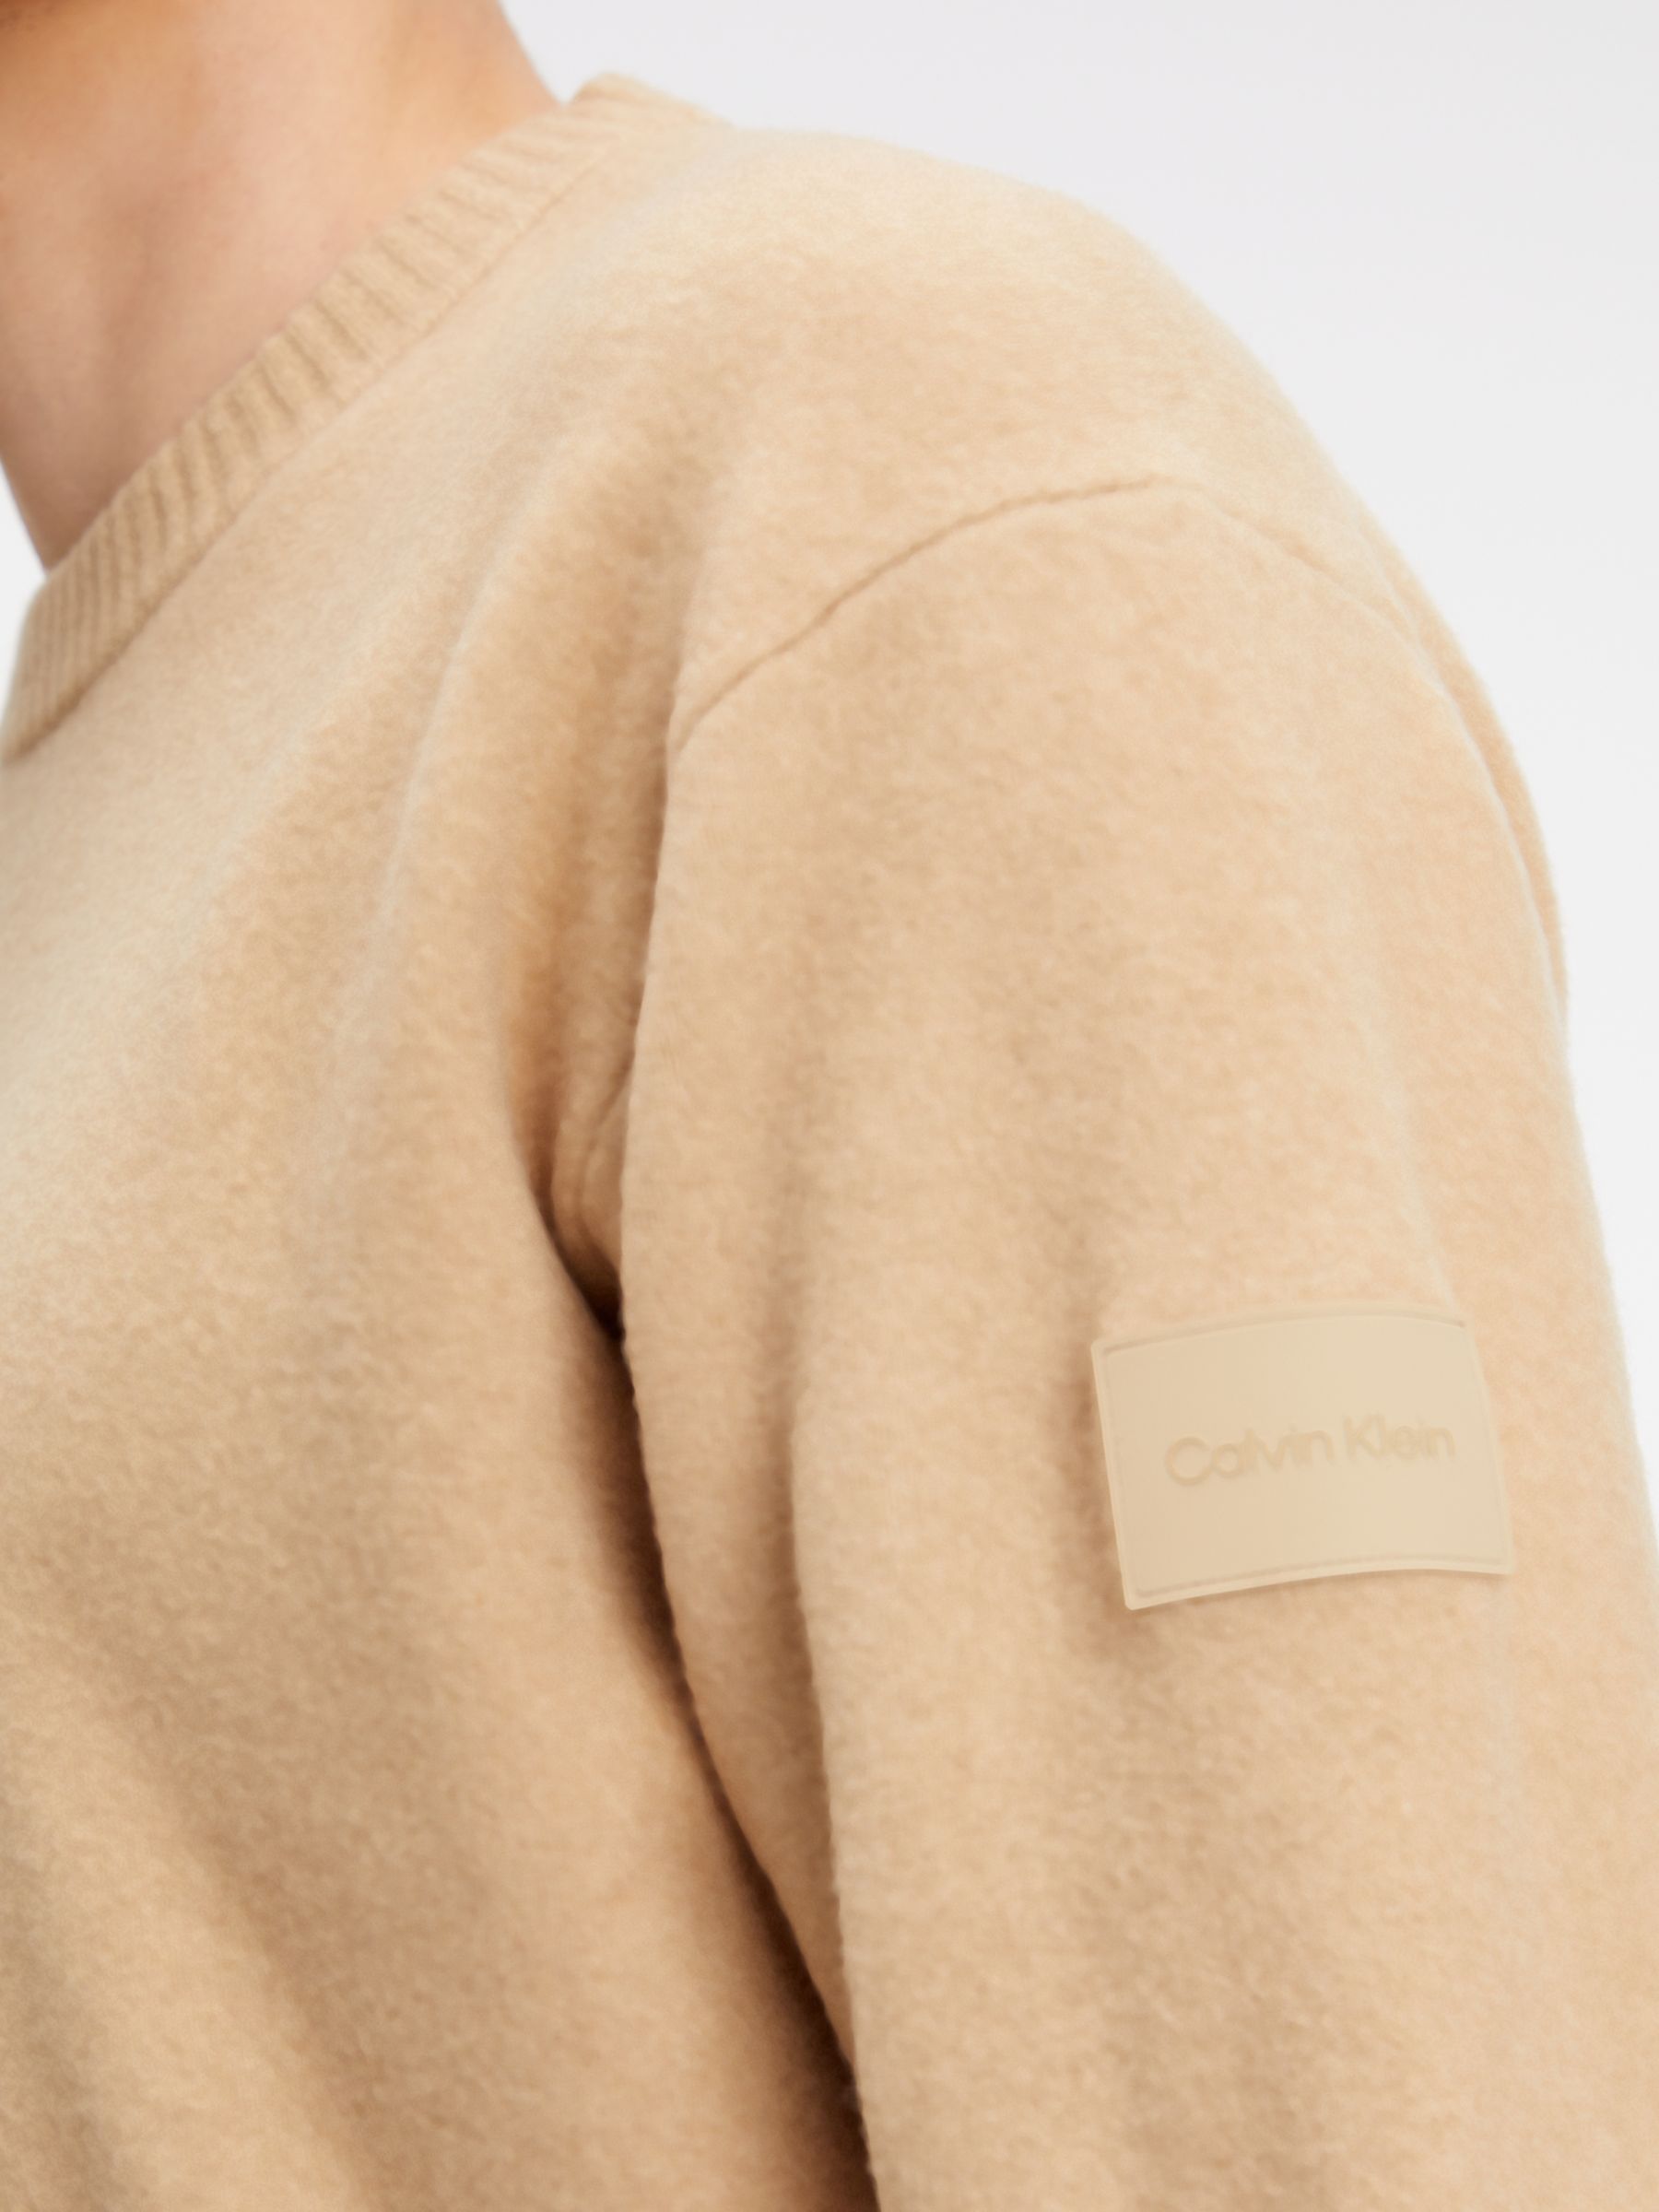 Buy Calvin Klein Comfort Fit Wool Blend Jumper Online at johnlewis.com